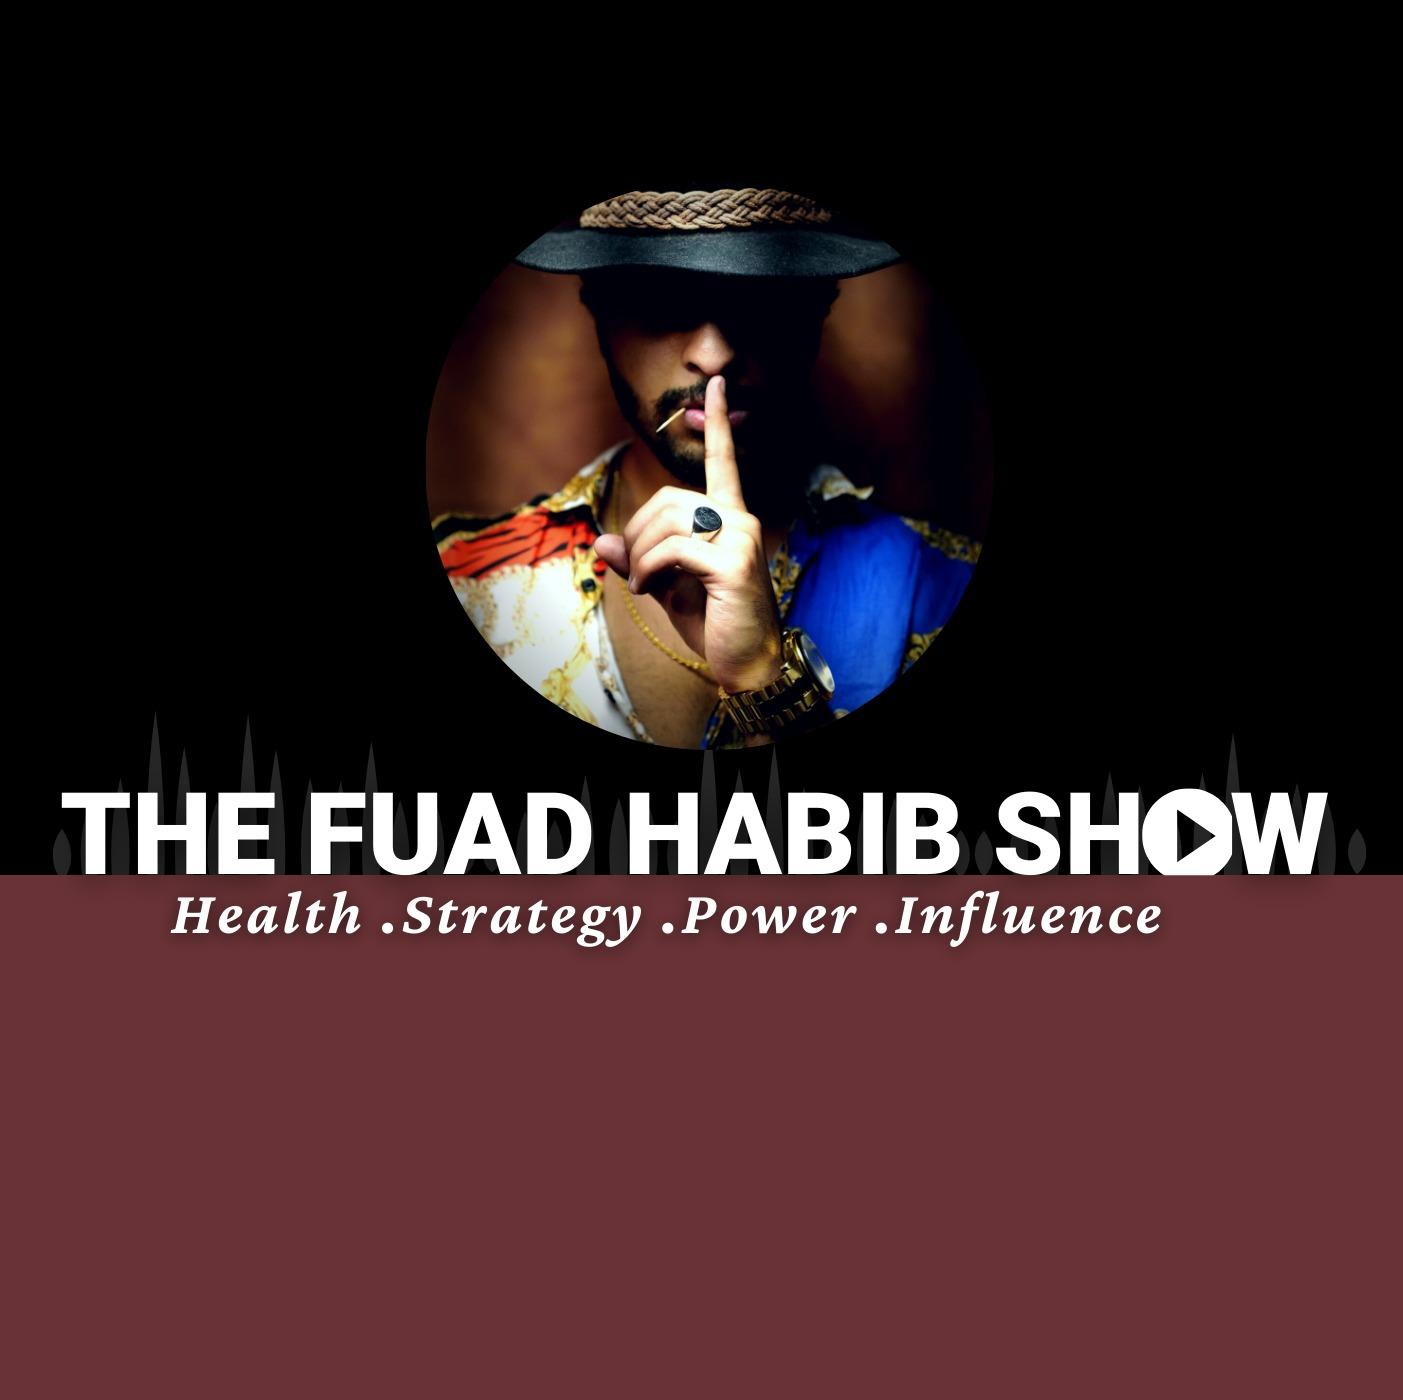 The Fuad Habib Show